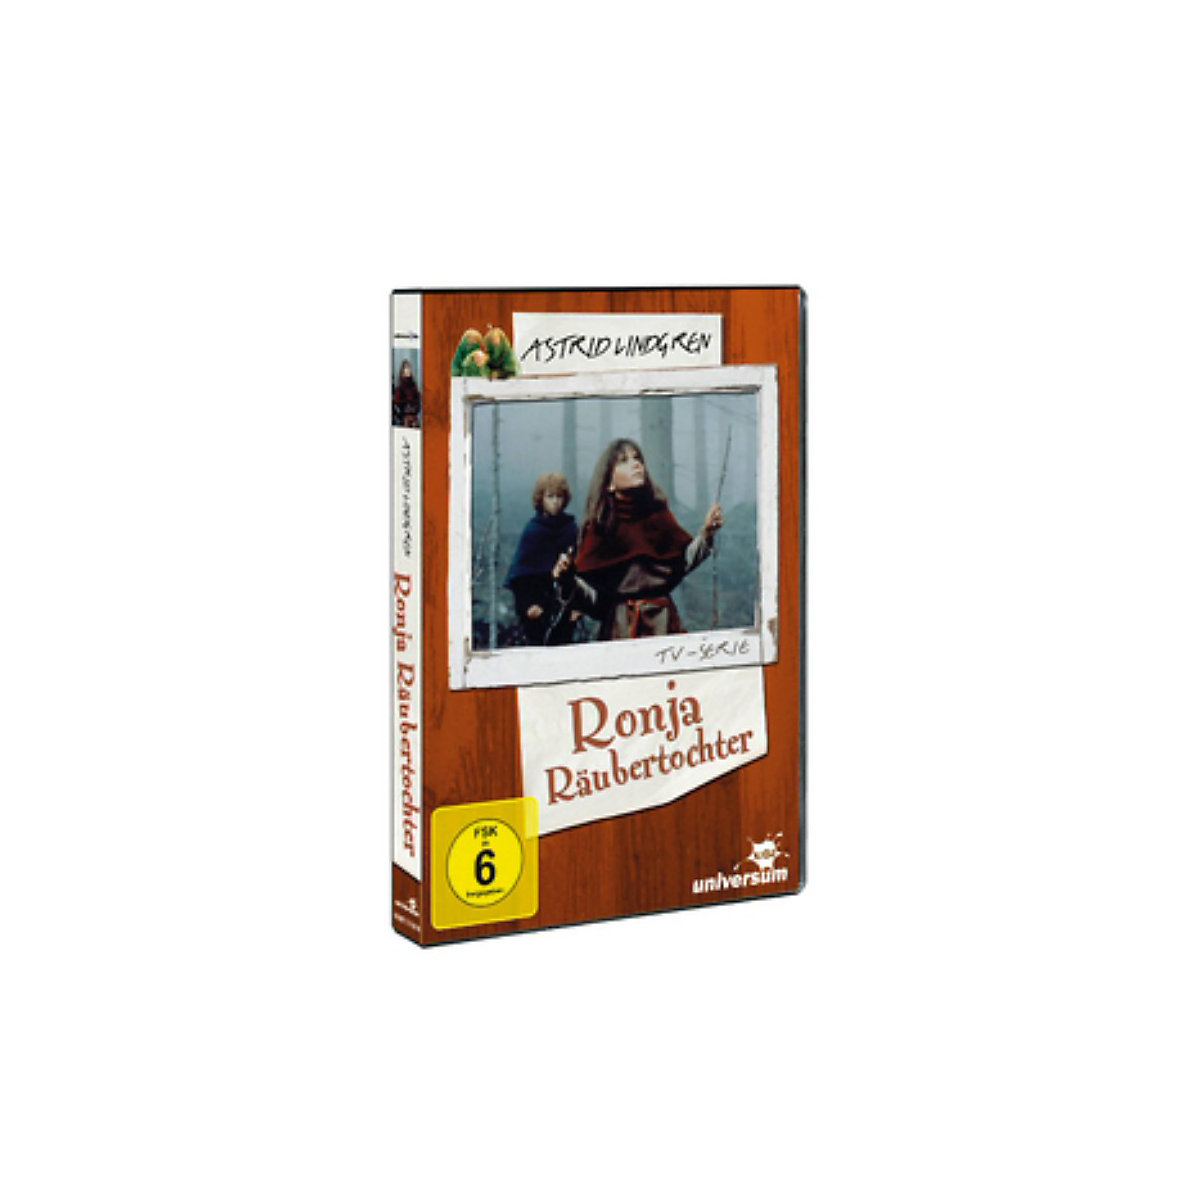 universum DVD Ronja Räubertochter (TV-Serie)